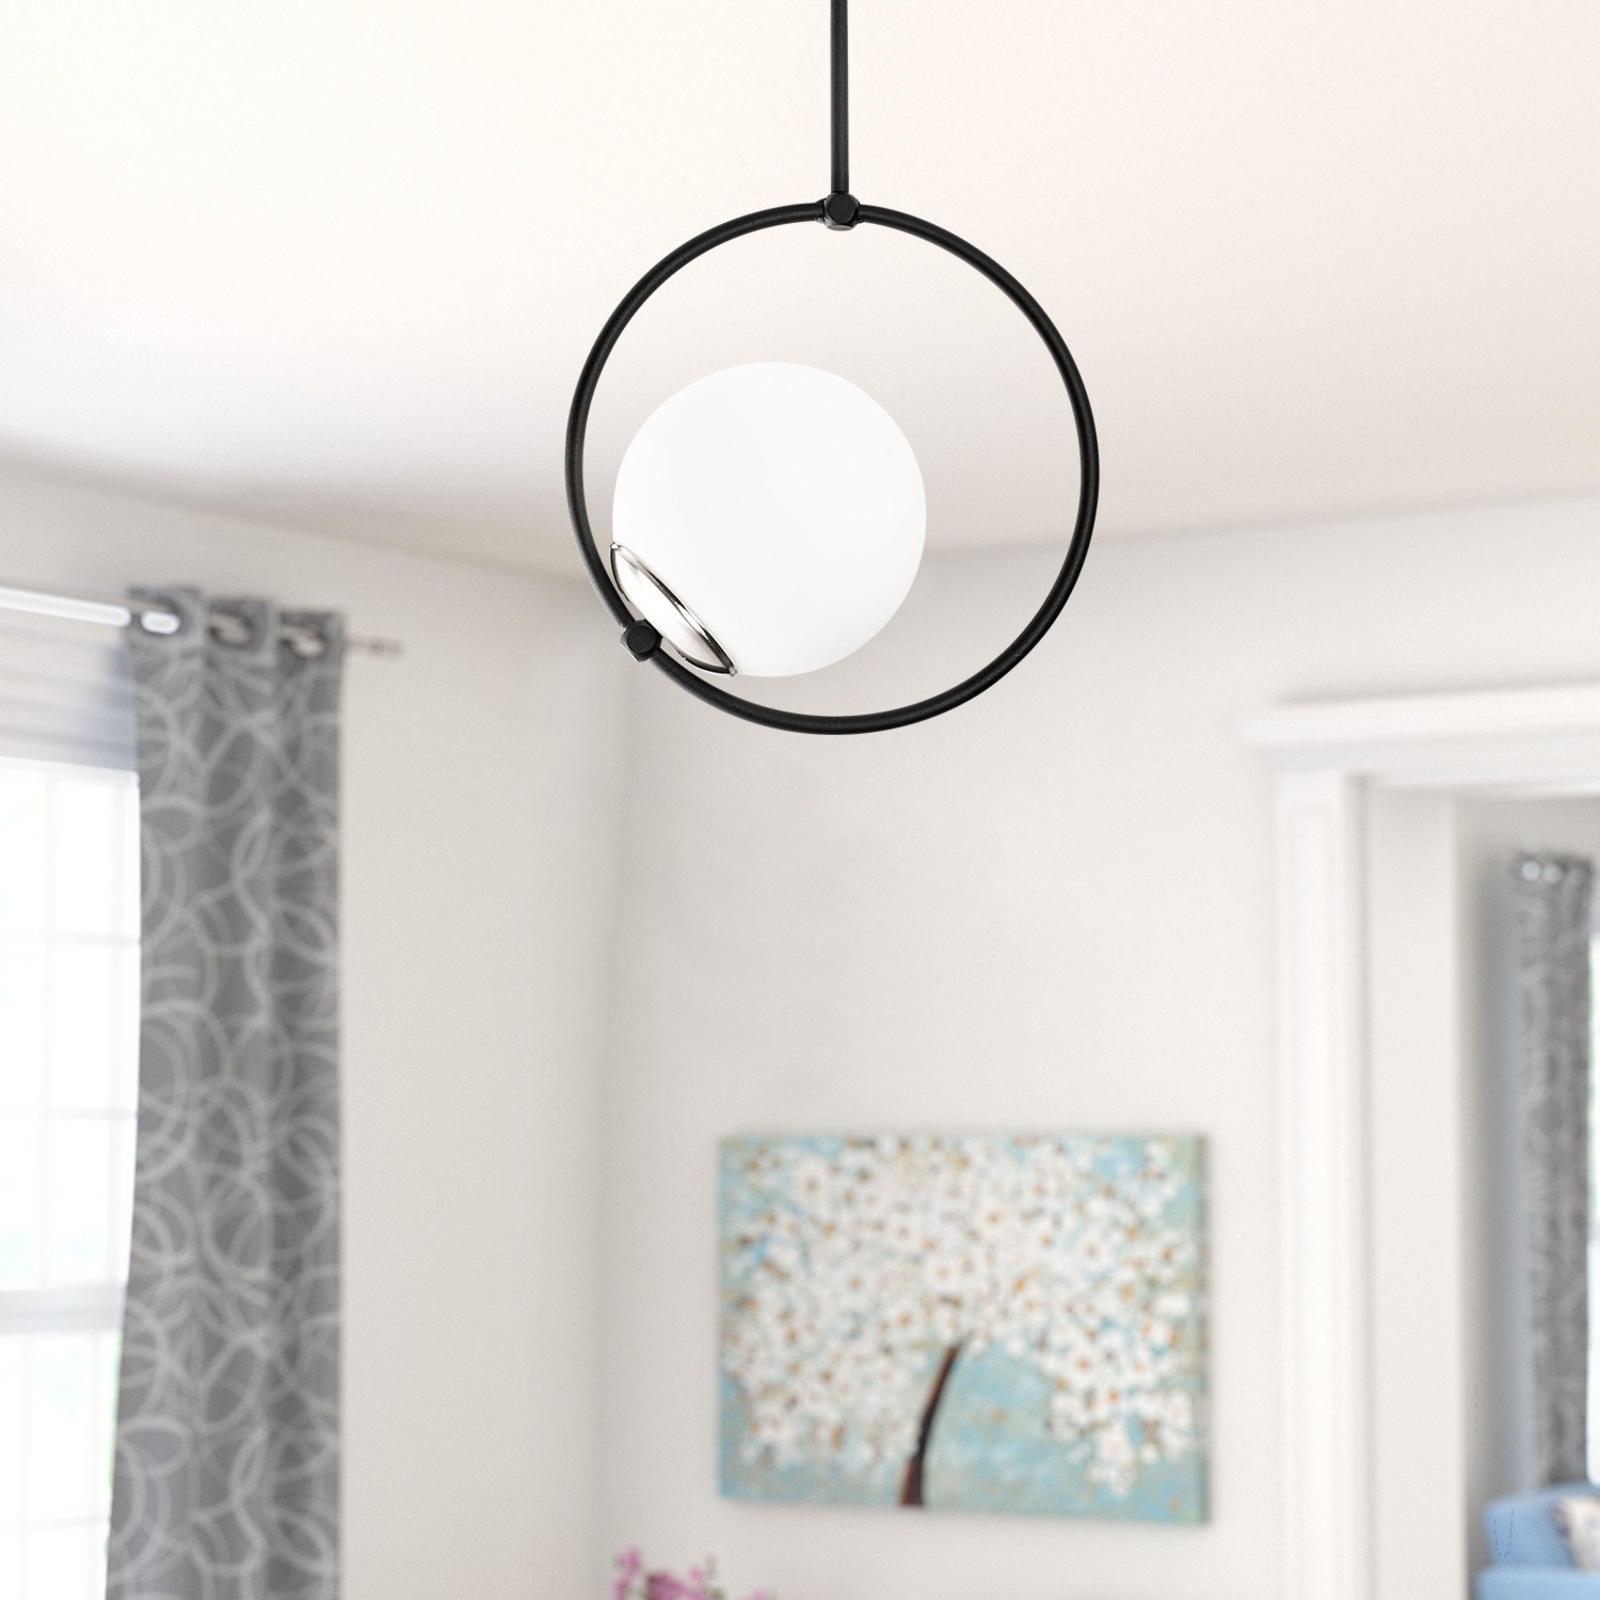 Dolunay 3901 ceiling lamp, black, glass, ring